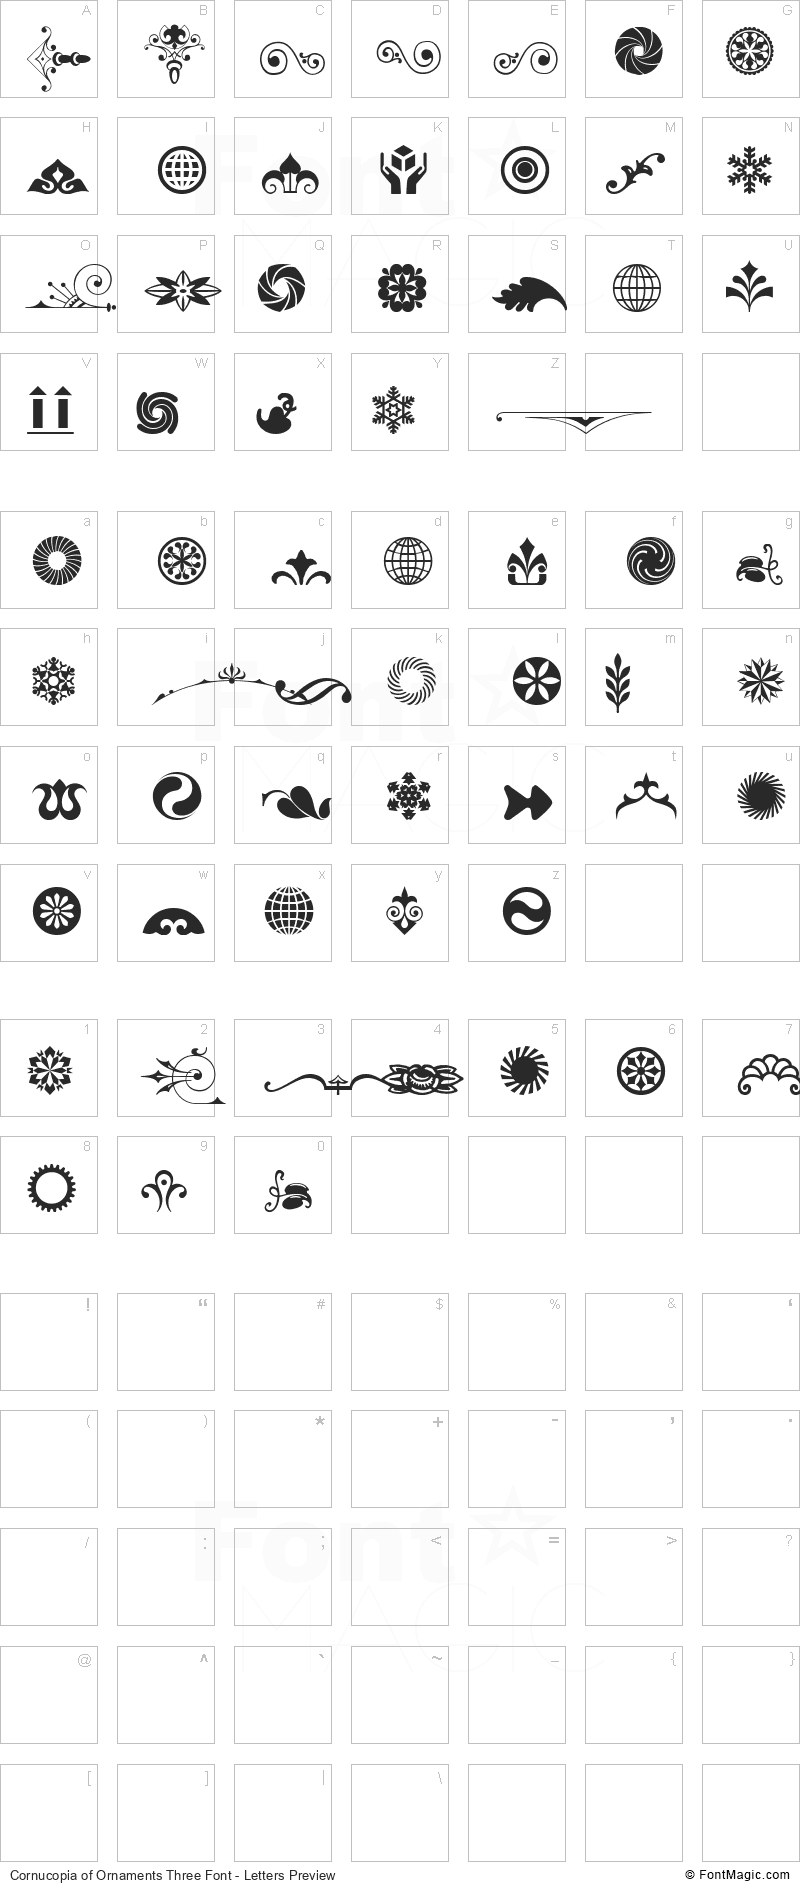 Cornucopia of Ornaments Three Font - All Latters Preview Chart